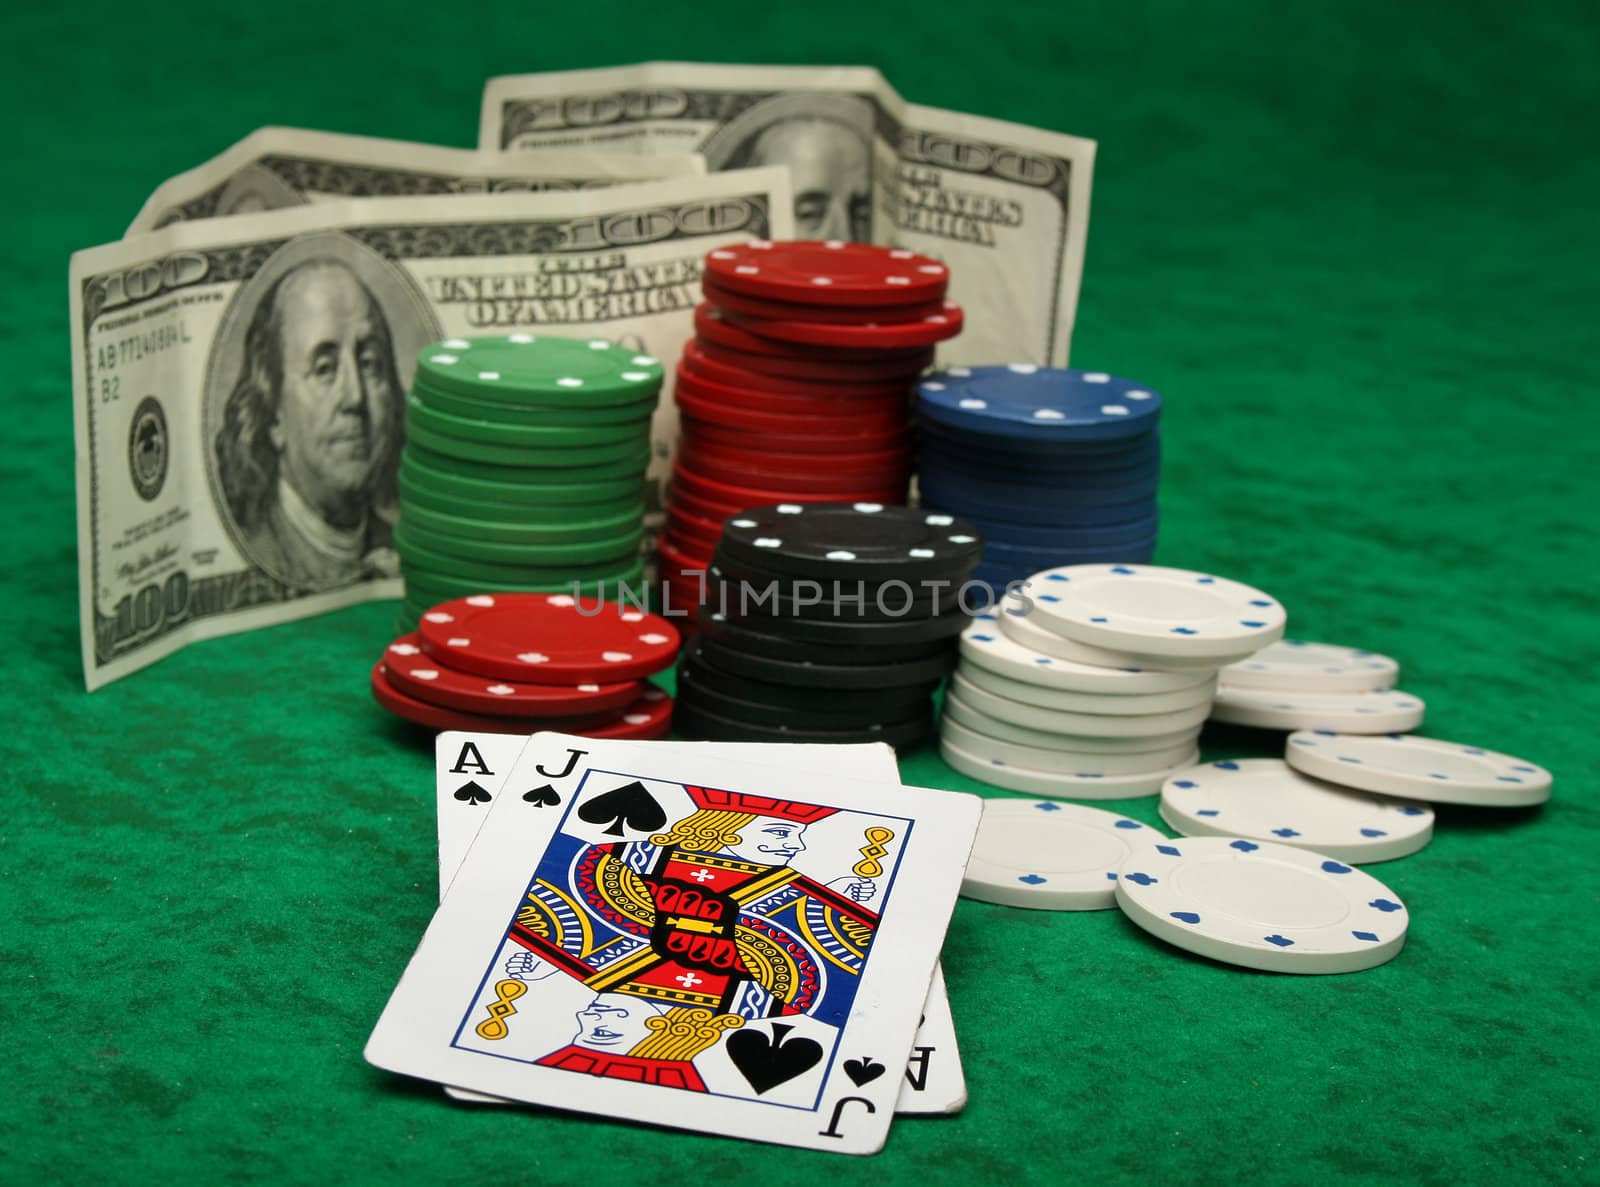 Blackjack with gambling chips by Erdosain